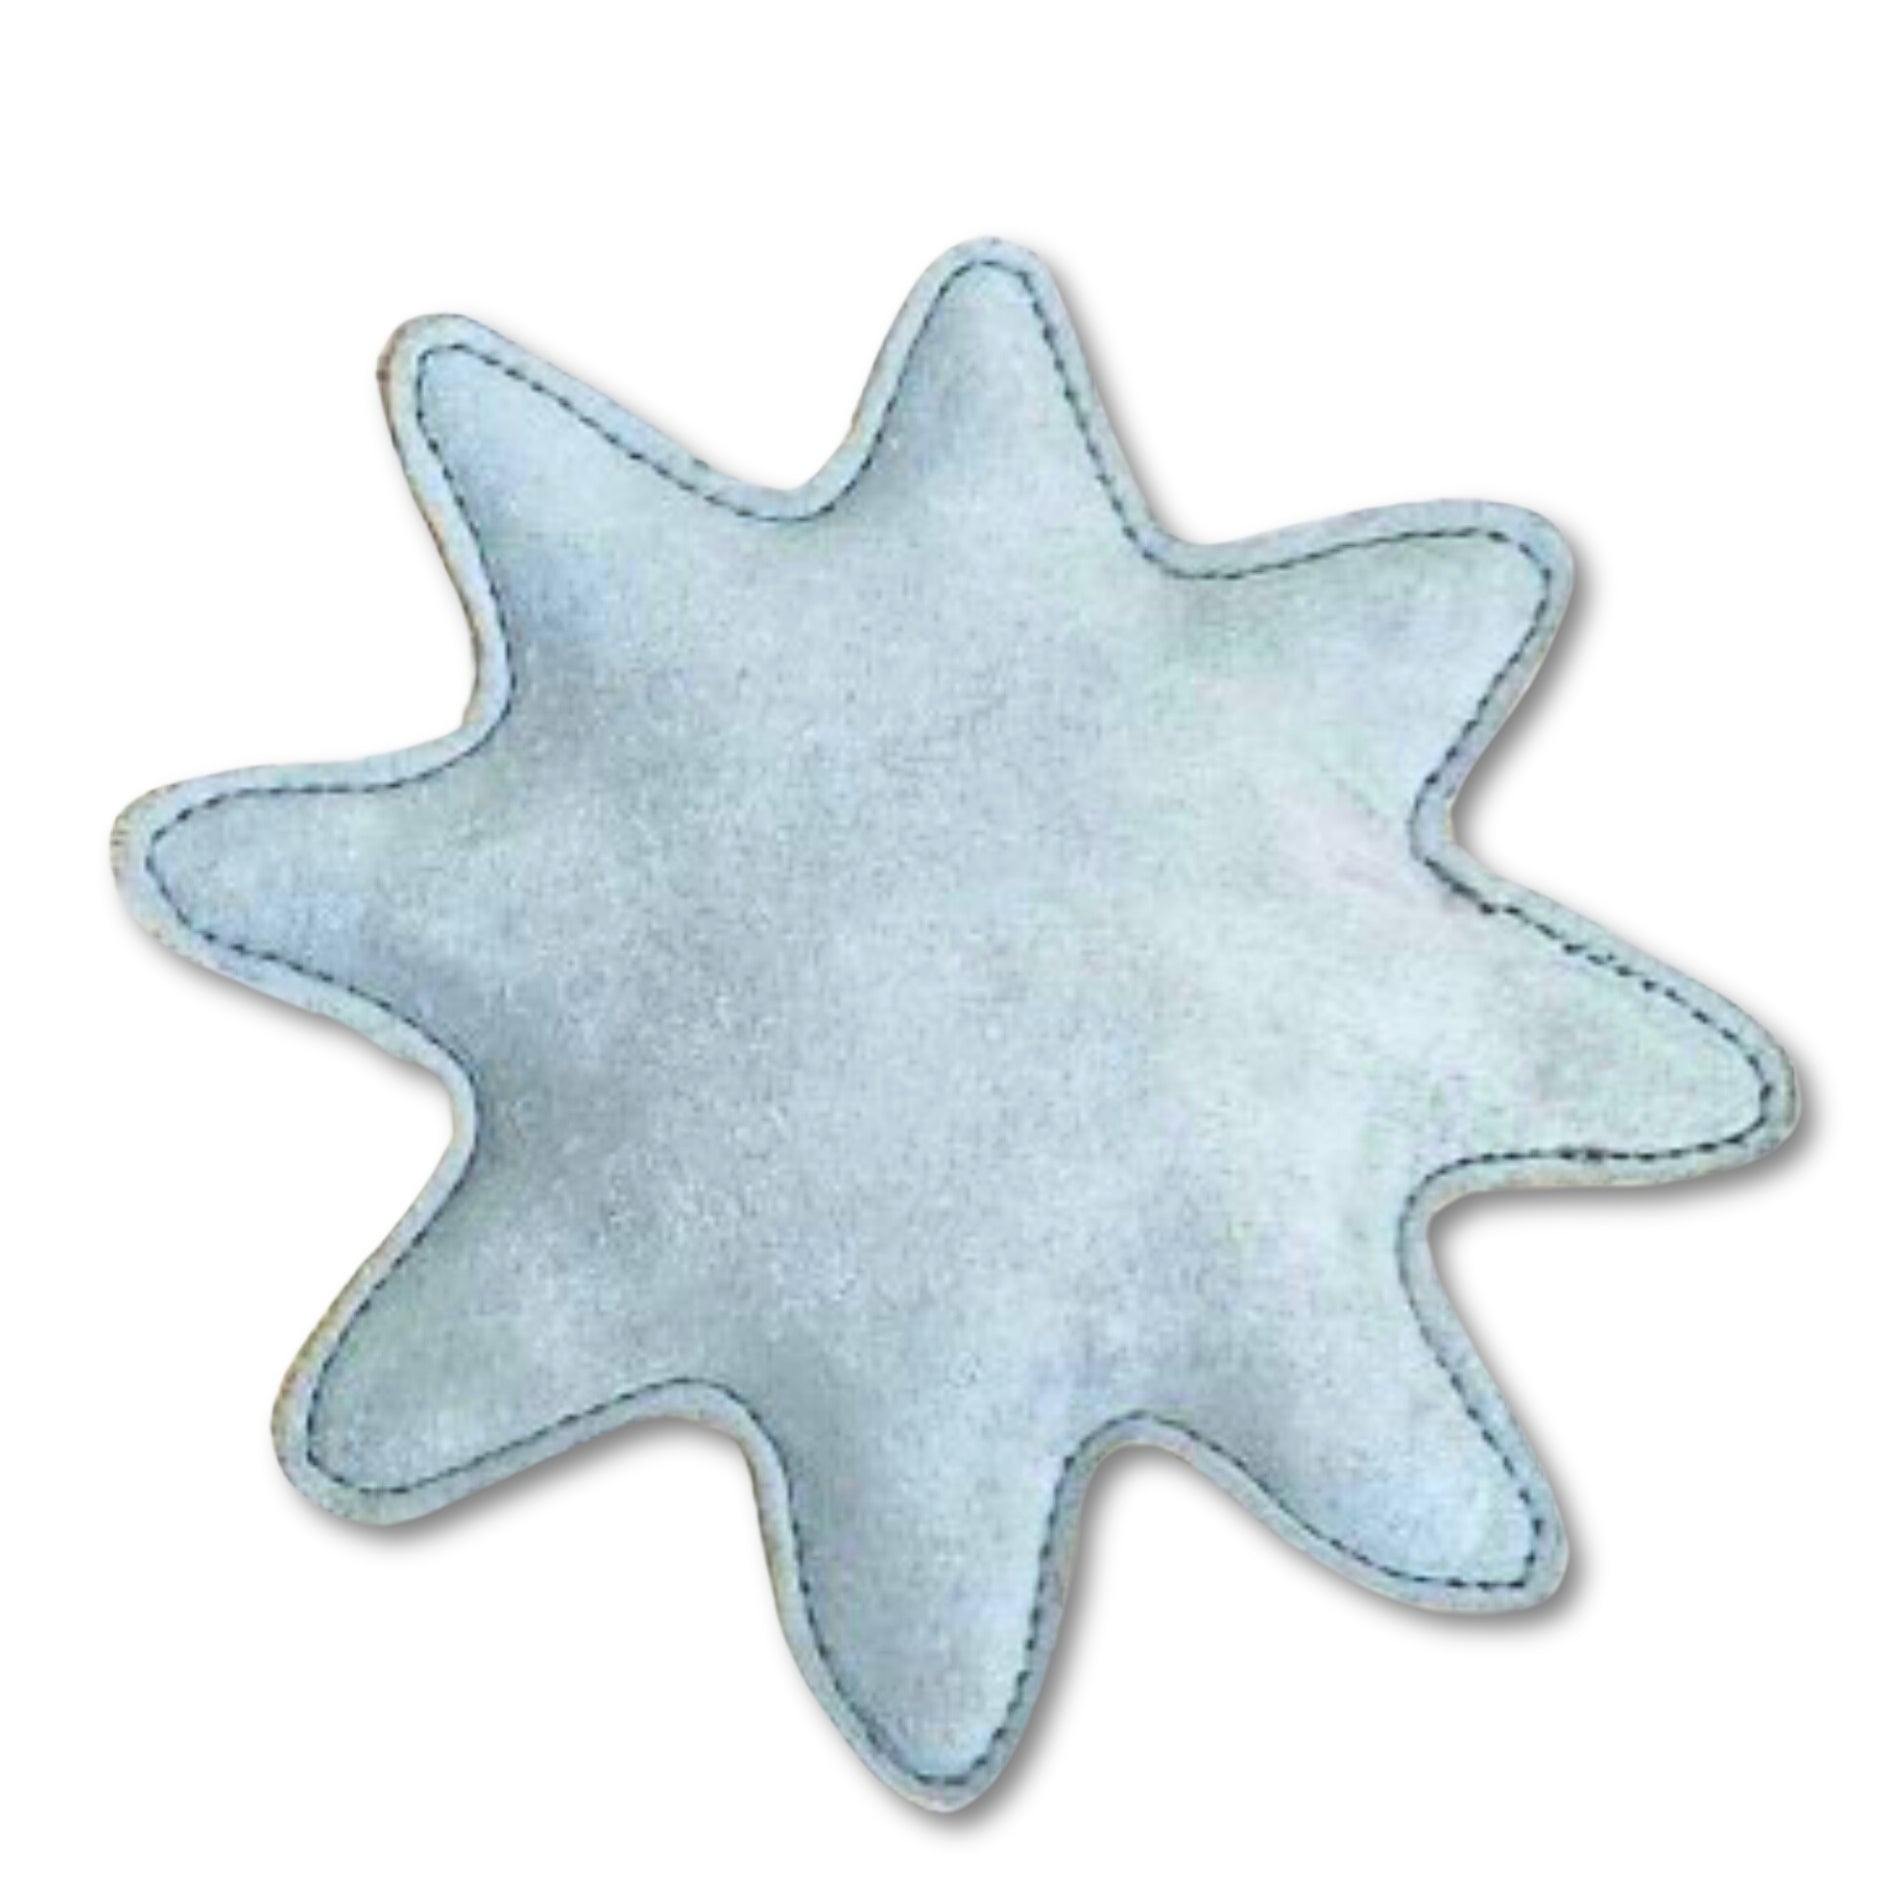 A cute star-shaped chewtoy by Georgie Paws.